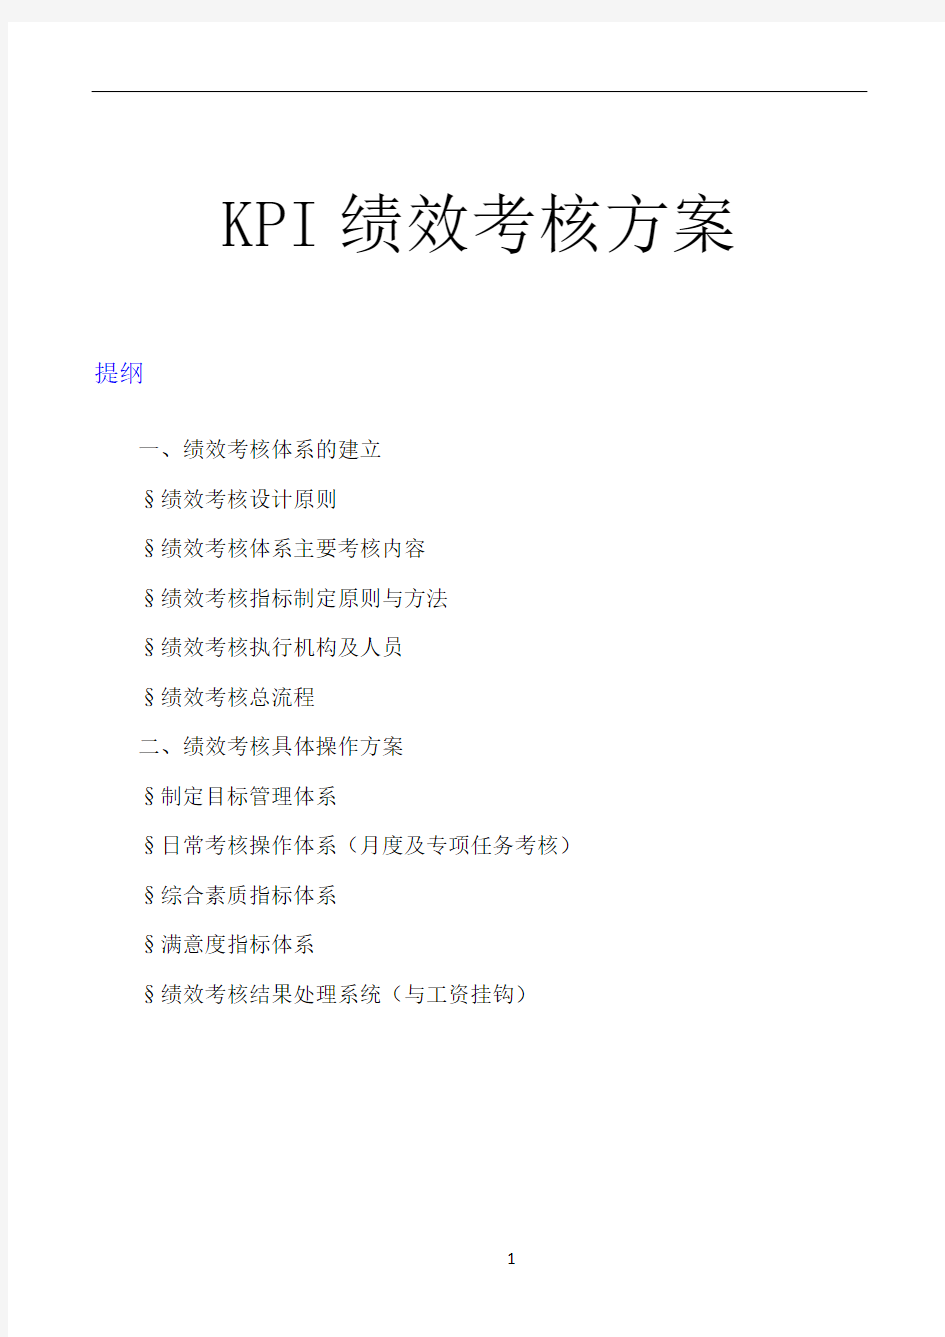 kpi绩效考核方案(模板)62225